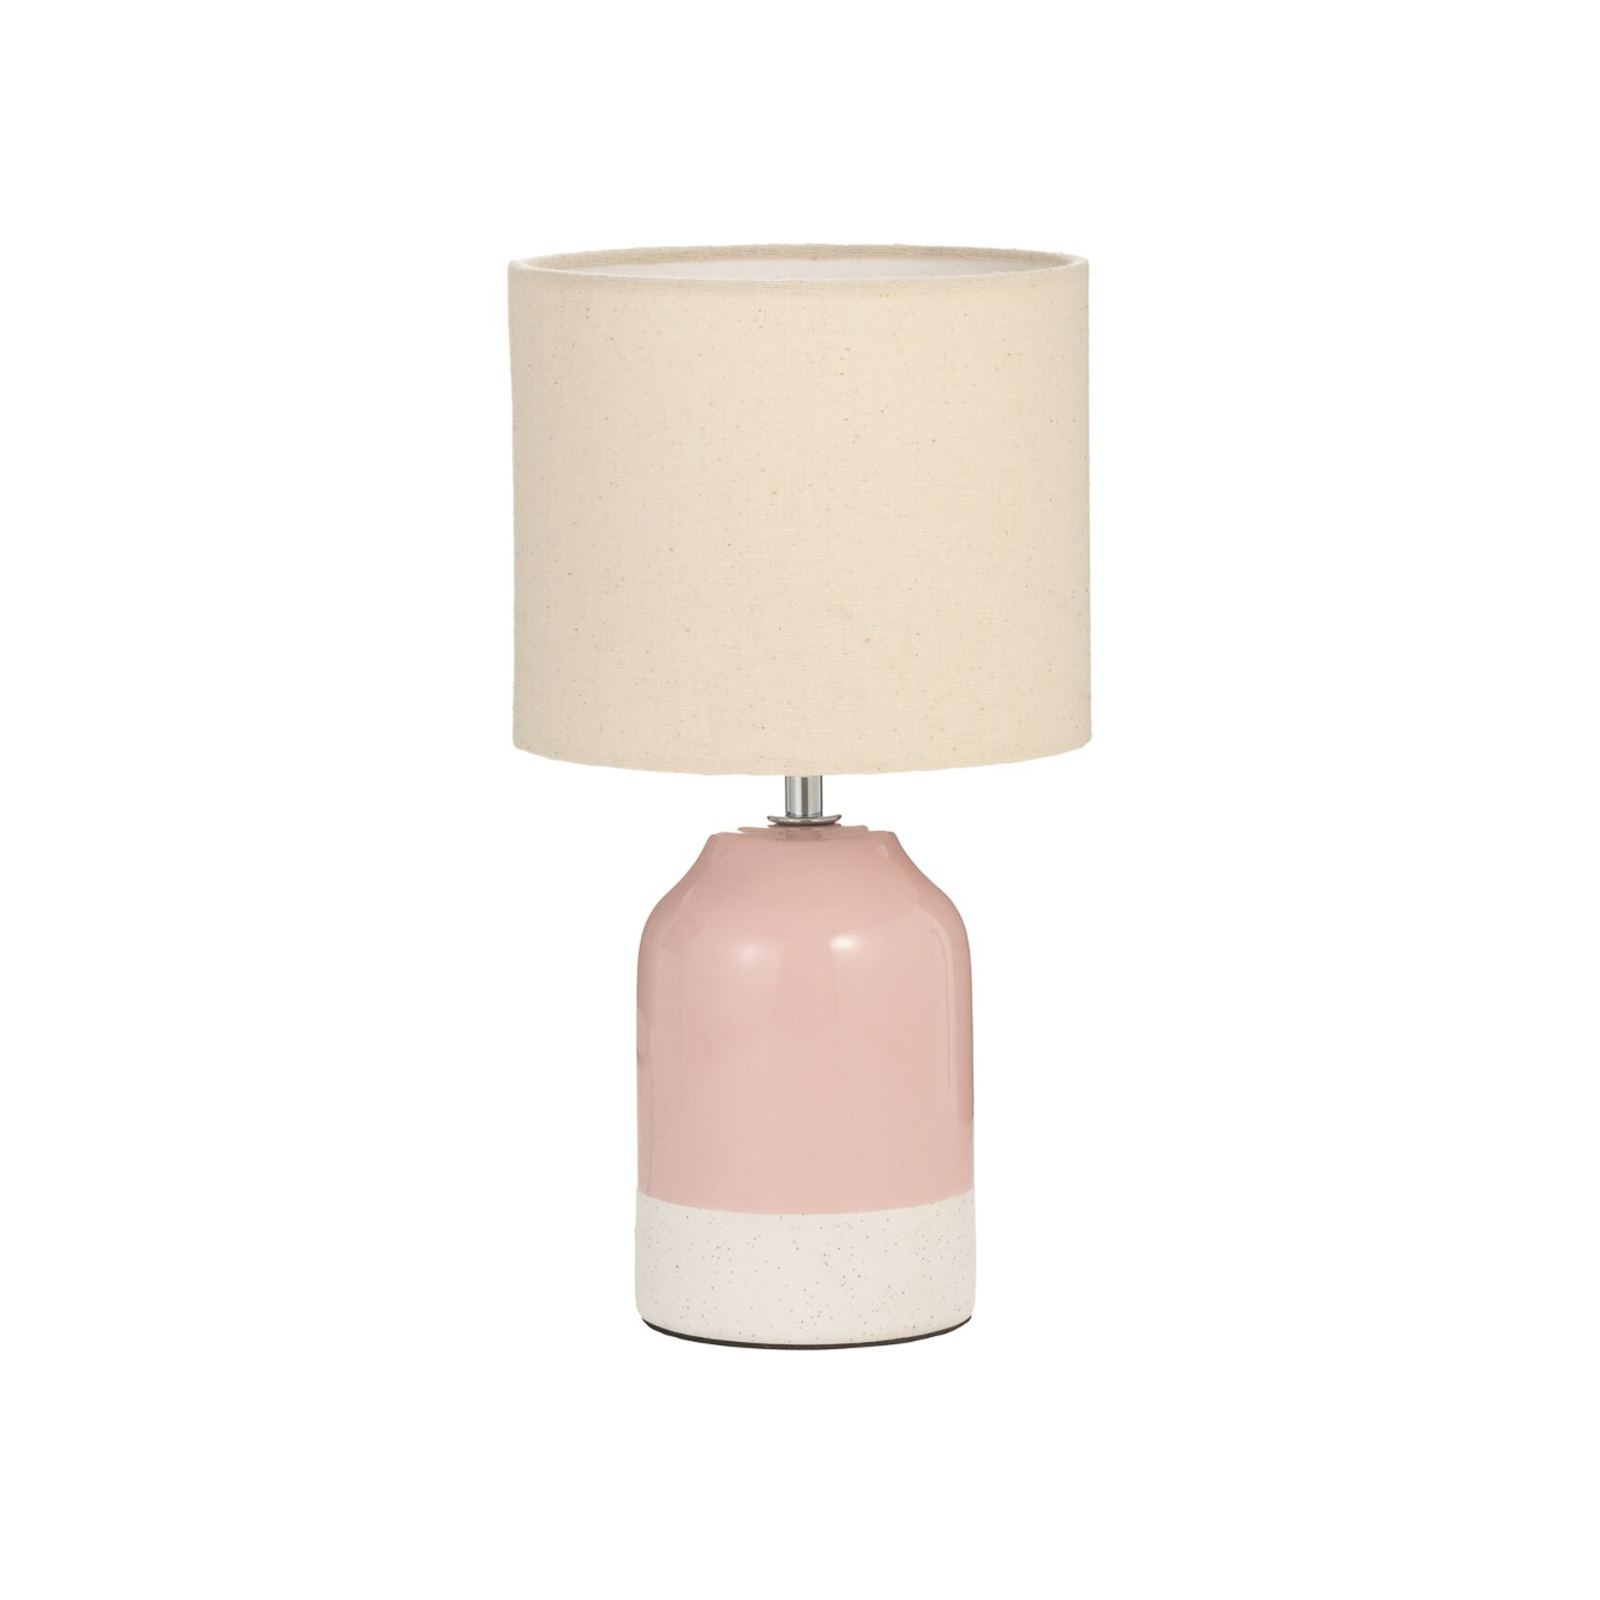 Pauleen Sandy Glow tafellamp, crème/roze